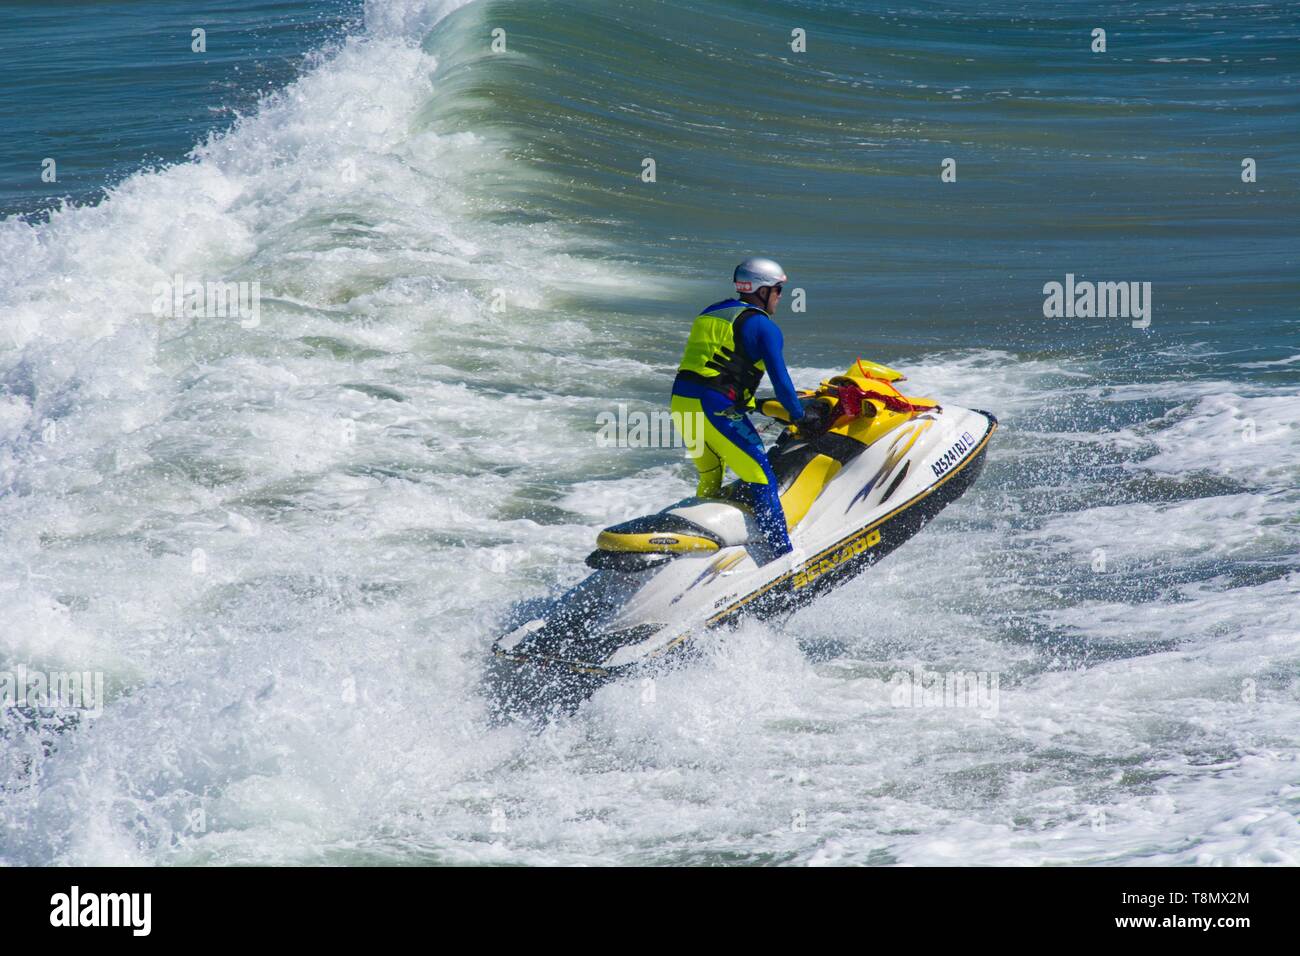 Huntington Beach, CA - 7. April 2019: Jet-Skifahrer steht im Jet-Ski auf, während er im Pazifik rast. Stockfoto